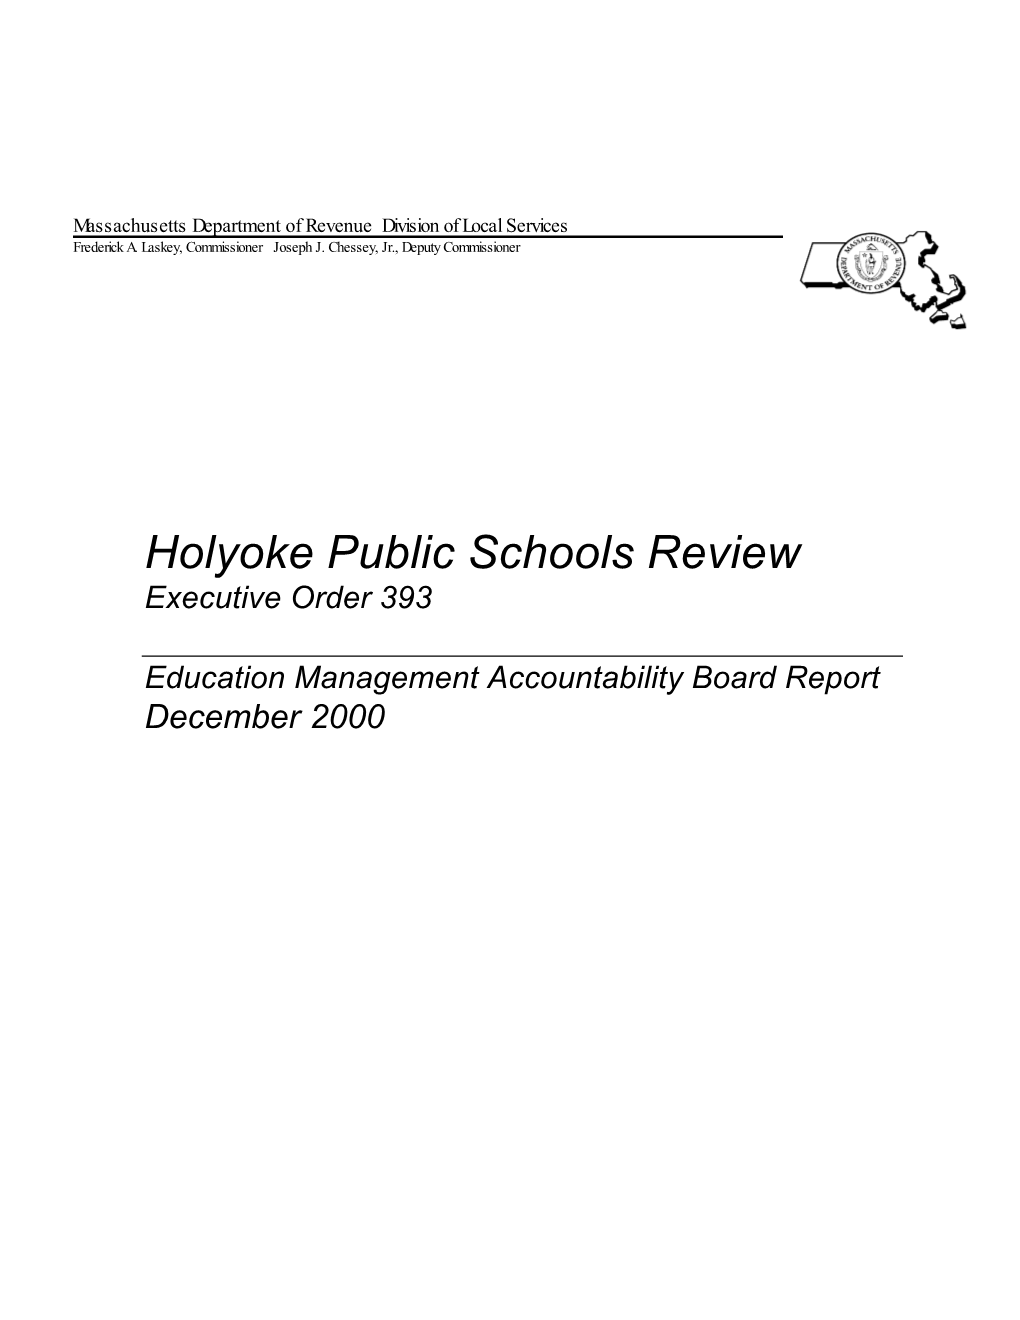 Holyoke Public Schools Review Executive Order 393